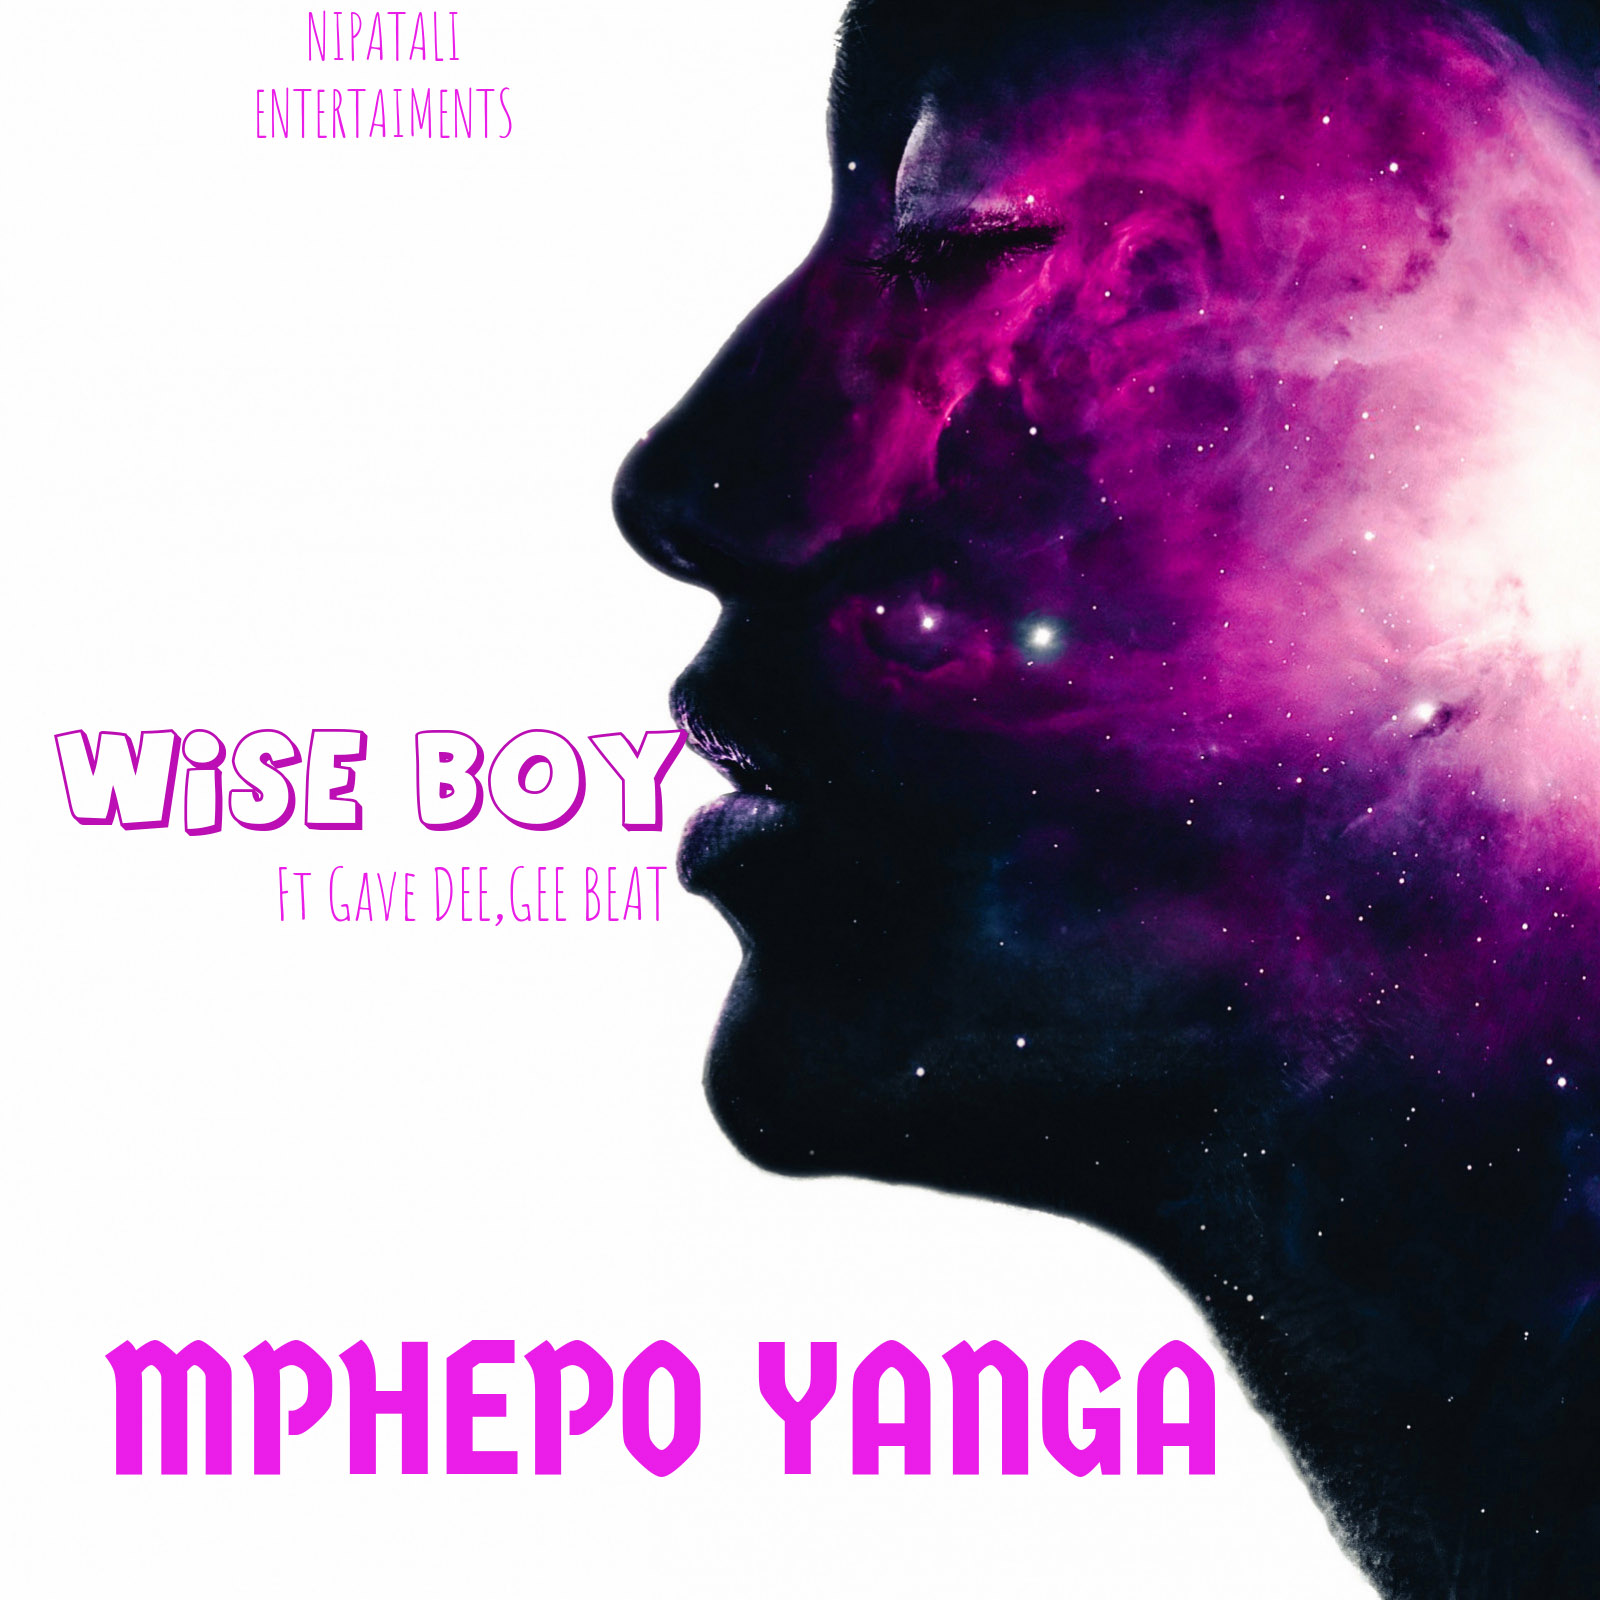 Mphepo Yanga  (Ft Gave dee, Gee Beat)